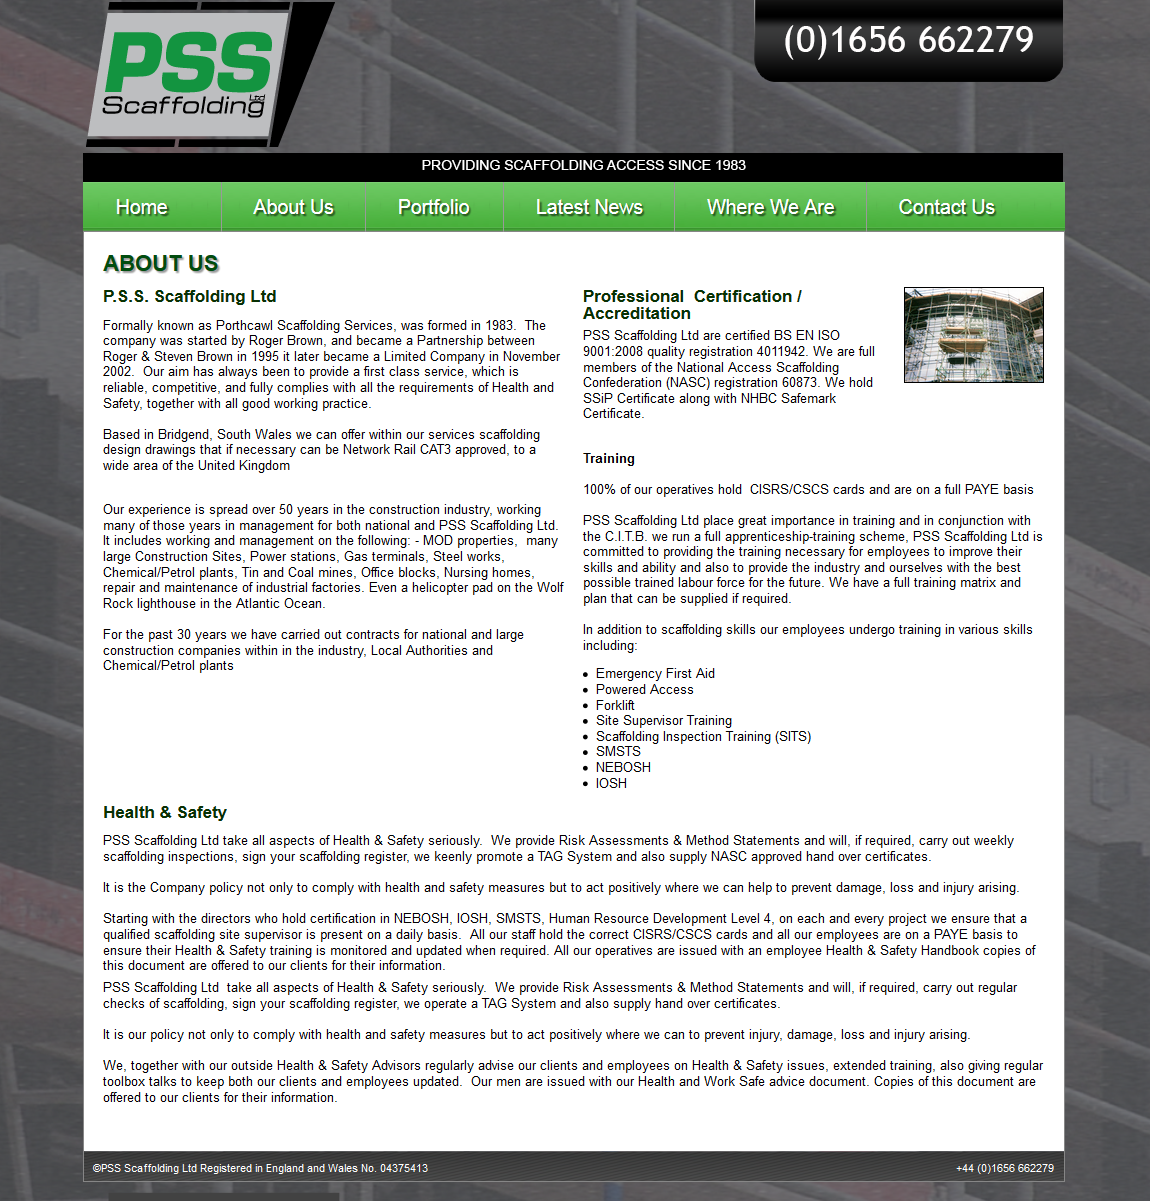 PSS Scaffolding Ltd